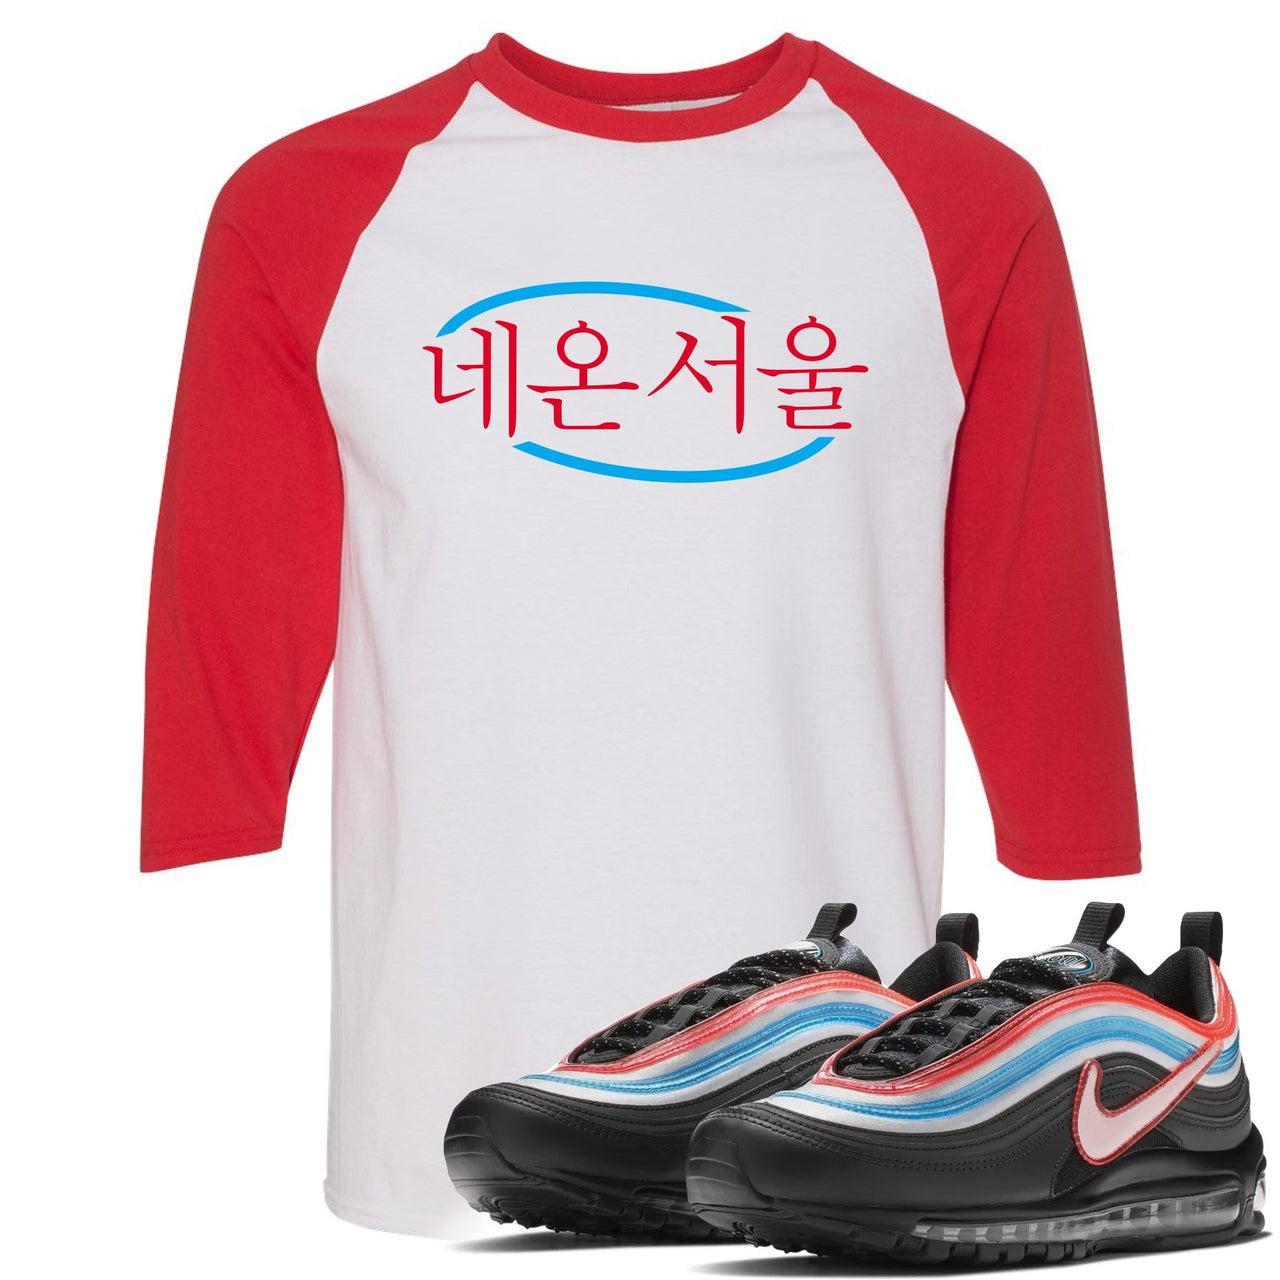 Neon Seoul 97s Raglan T Shirt | Seoul in Korean, White and Red